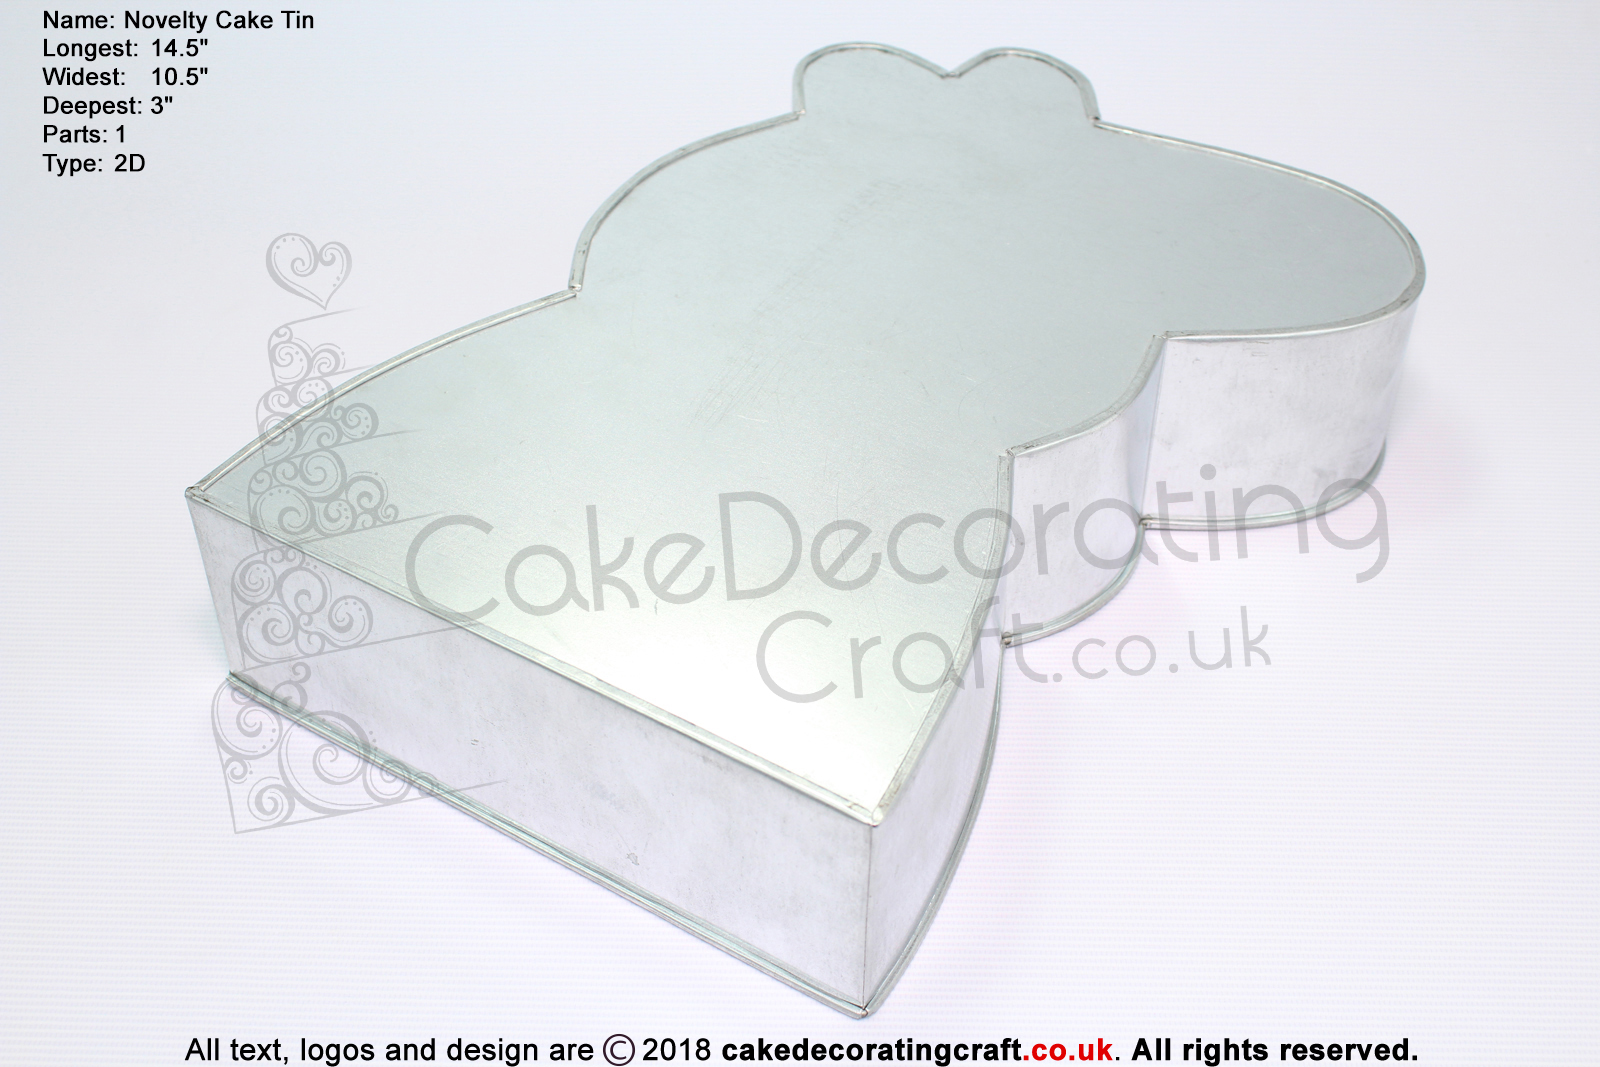 Peppa Pig | Novelty Shape | Cake Baking Tins and Pans | 3" Deep